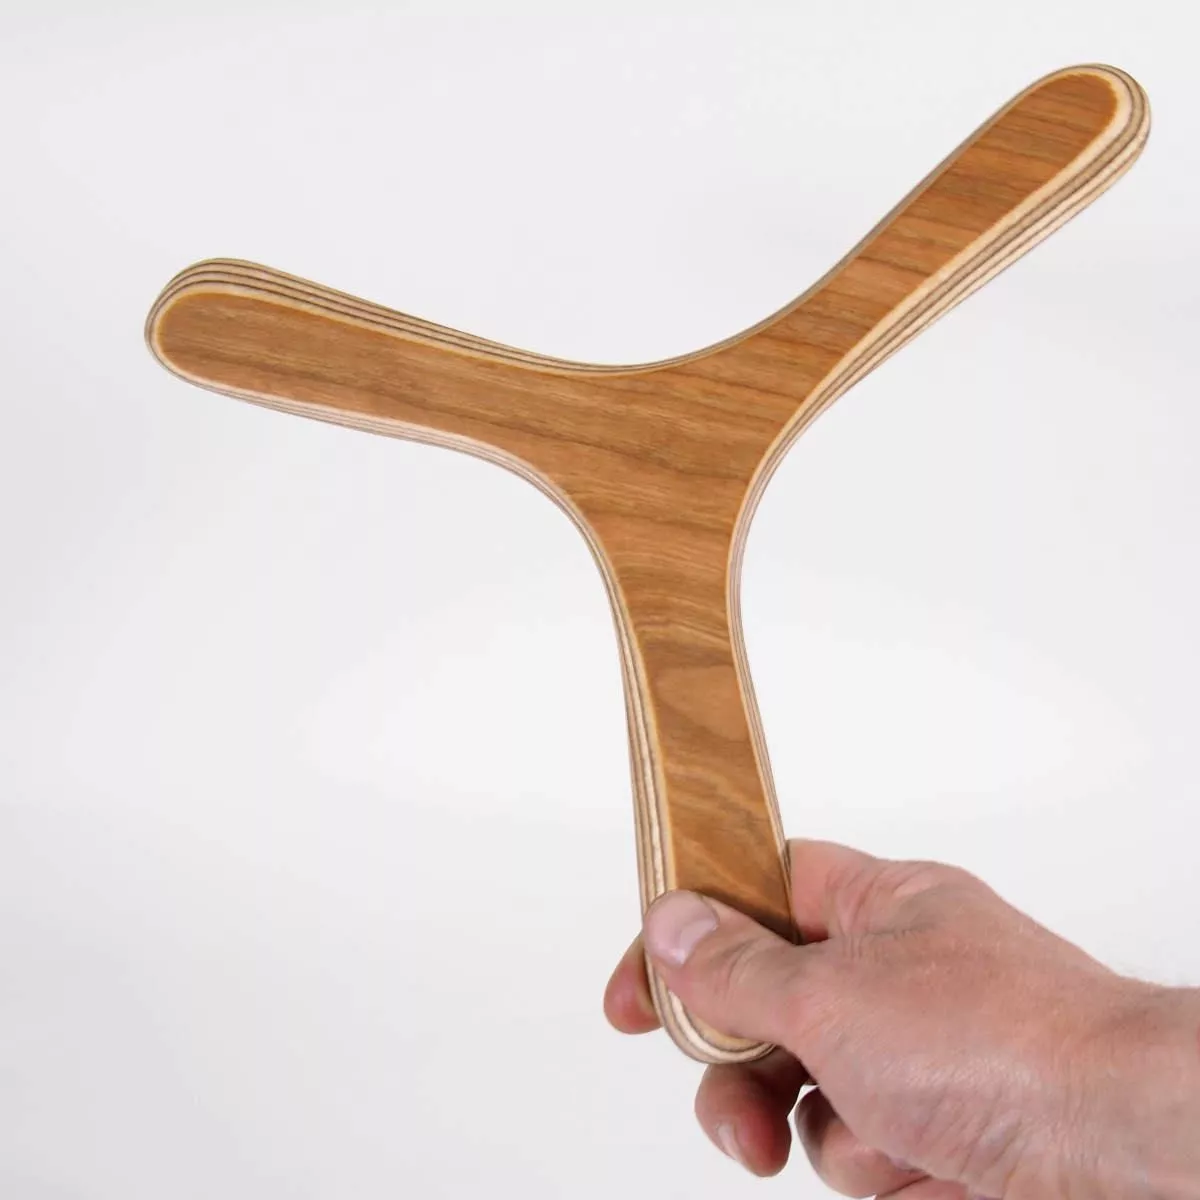 Handcrafted Triple-Wing Boomerang "Apple" made of European Woods (flies 15 m)